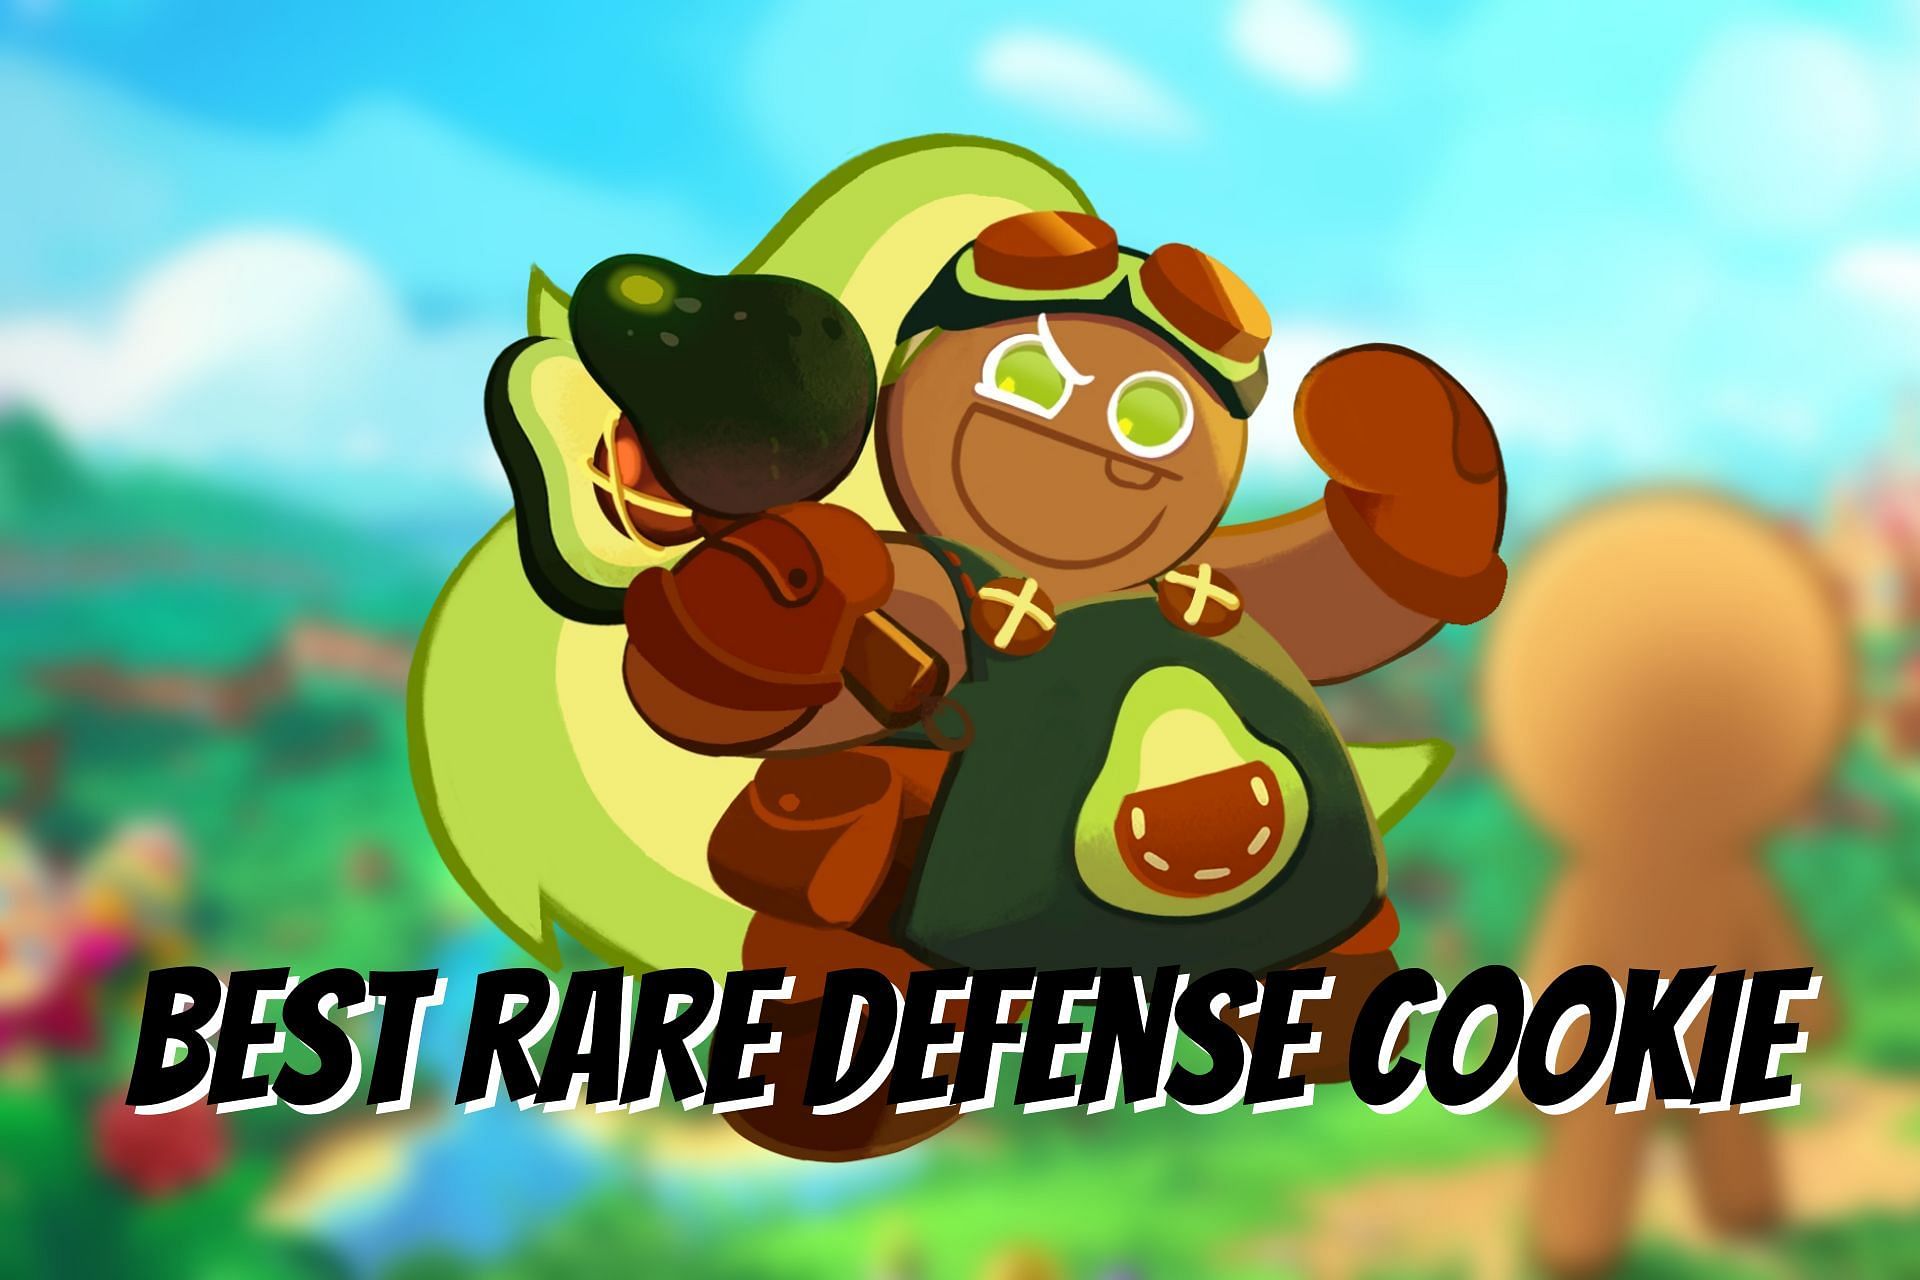 Avocado Cookie is an ideal defensive character for most intermediate Cookie Run: Kingdom players (Image via Sportskeeda)